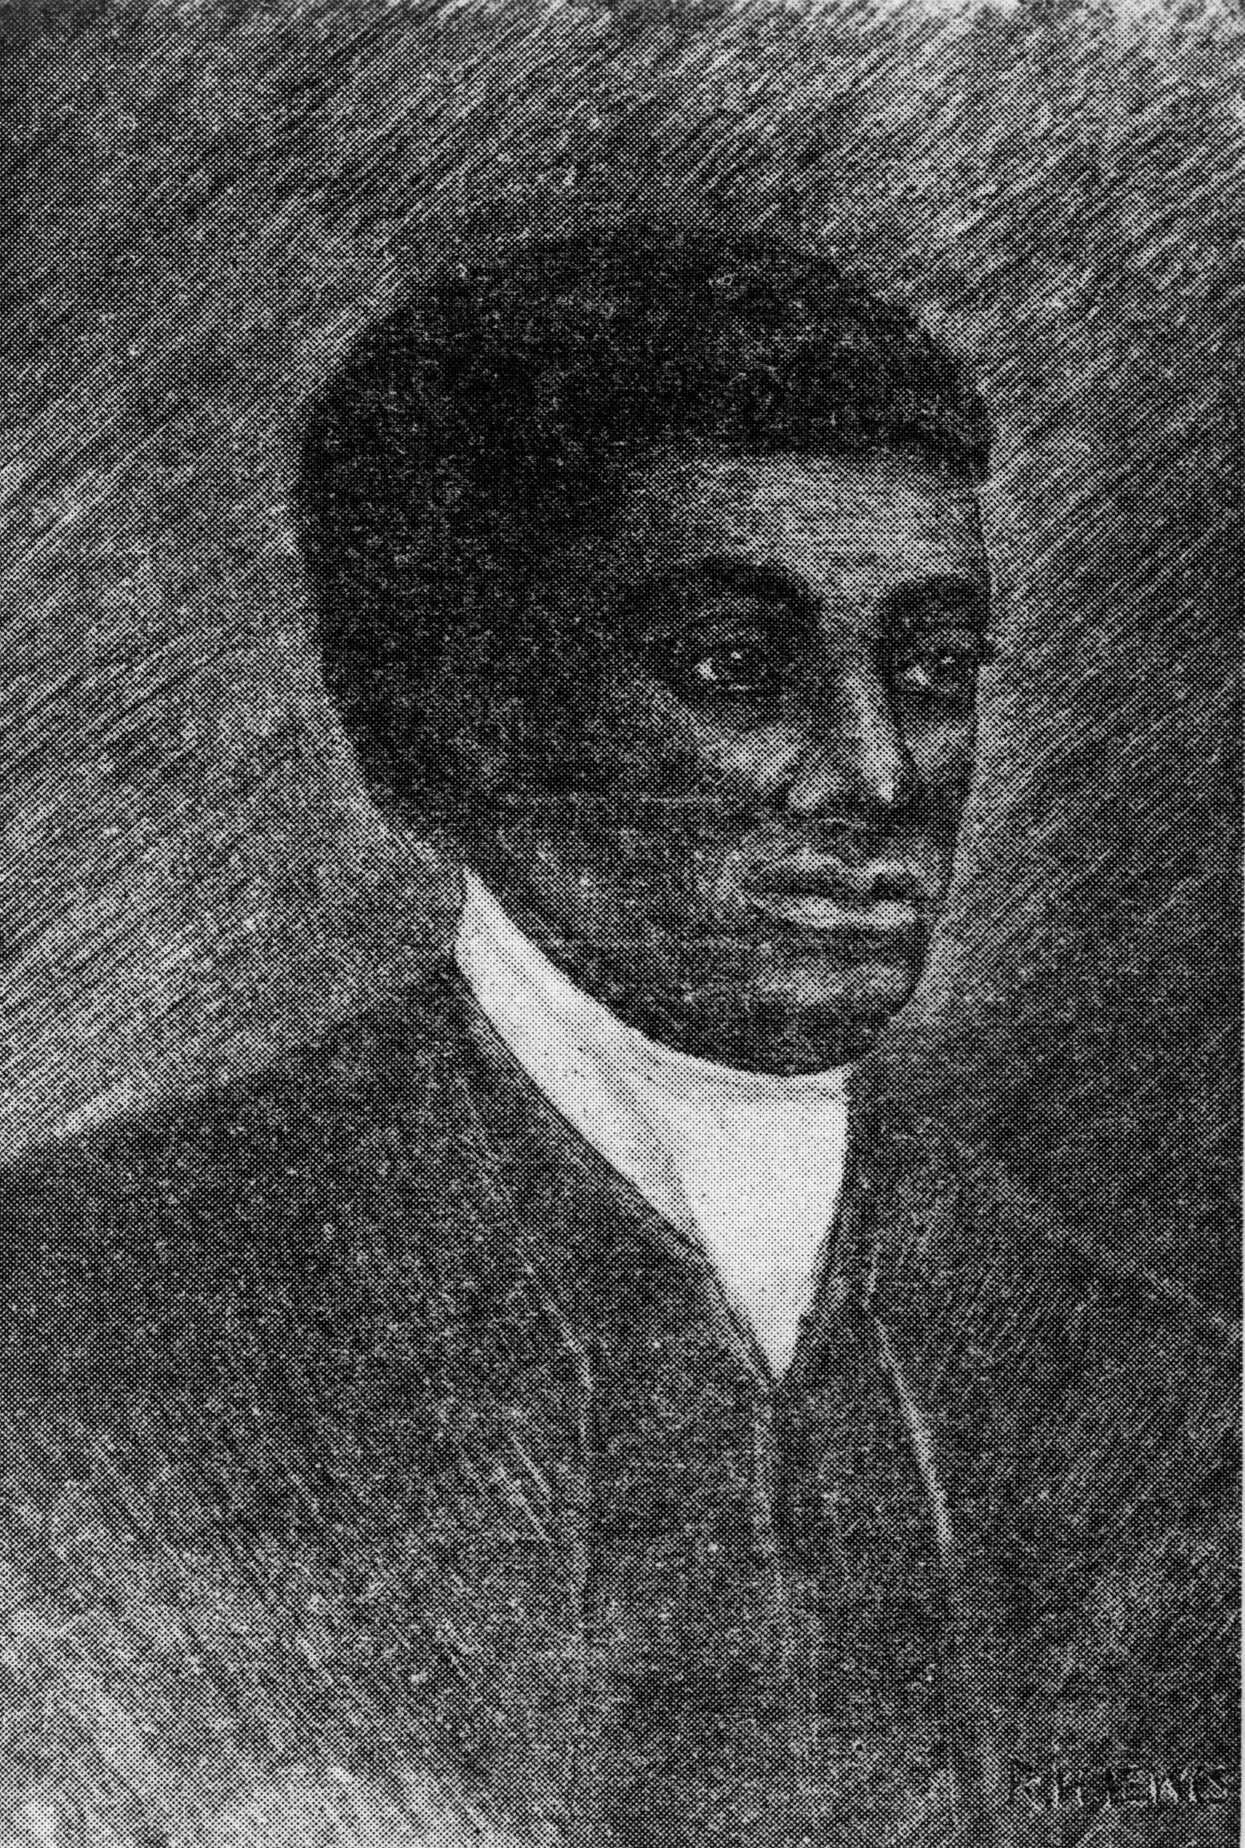 Black and white portrait of Benjamin Banneker